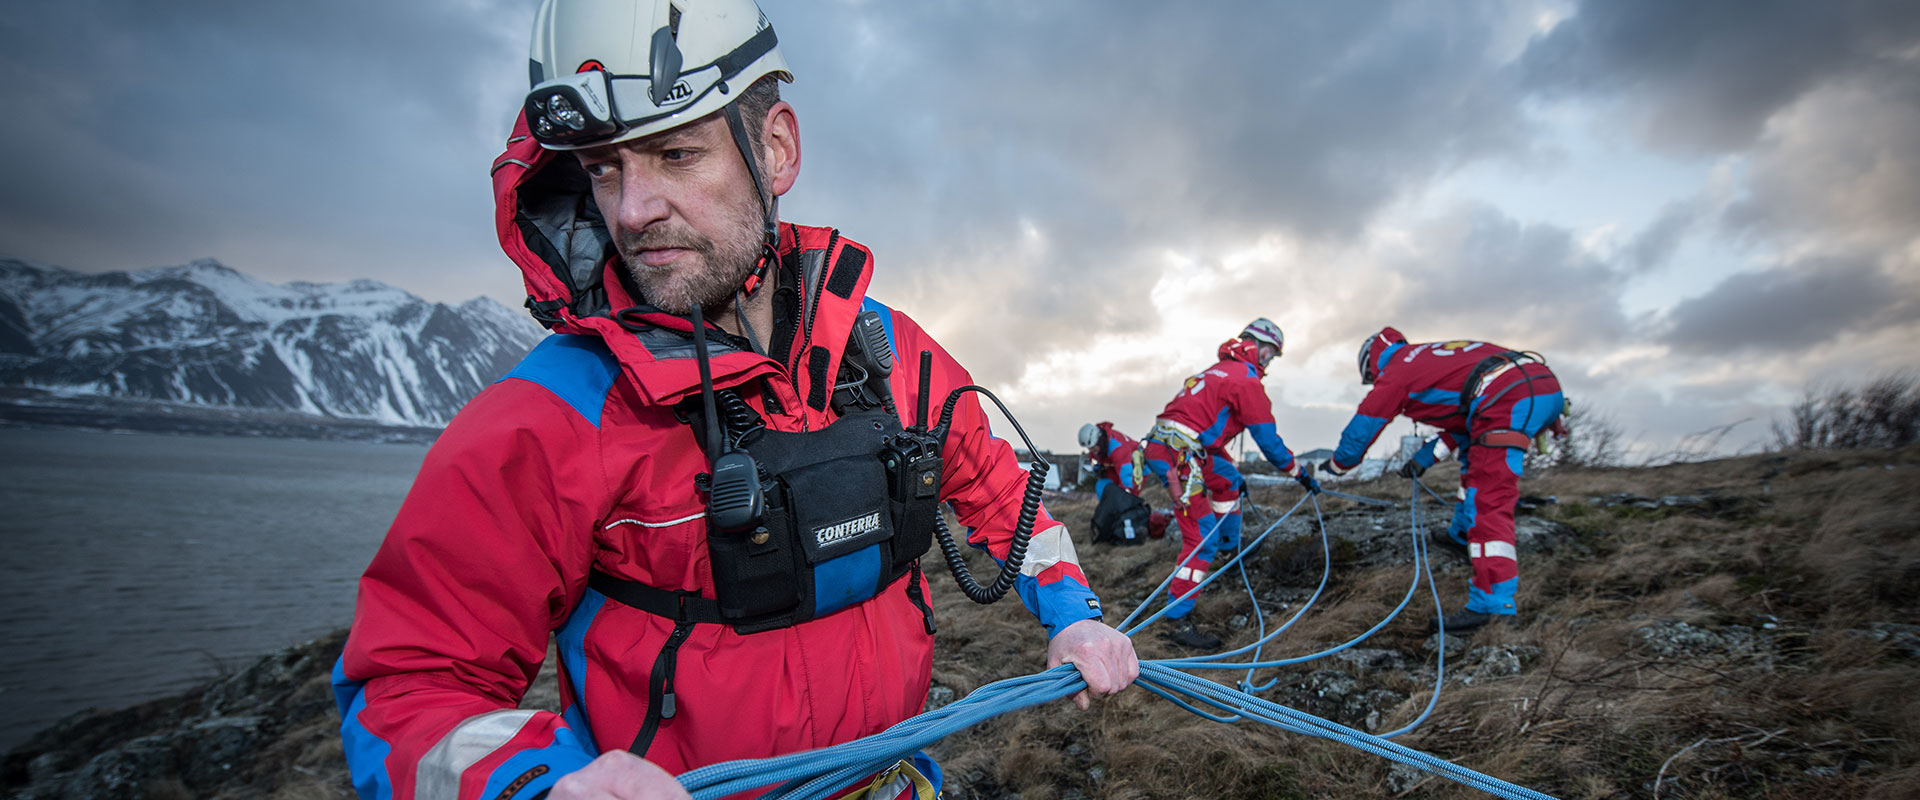 Isländsk Search & Rescue-personal iklädda Taigas arbetskläde i karg miljö